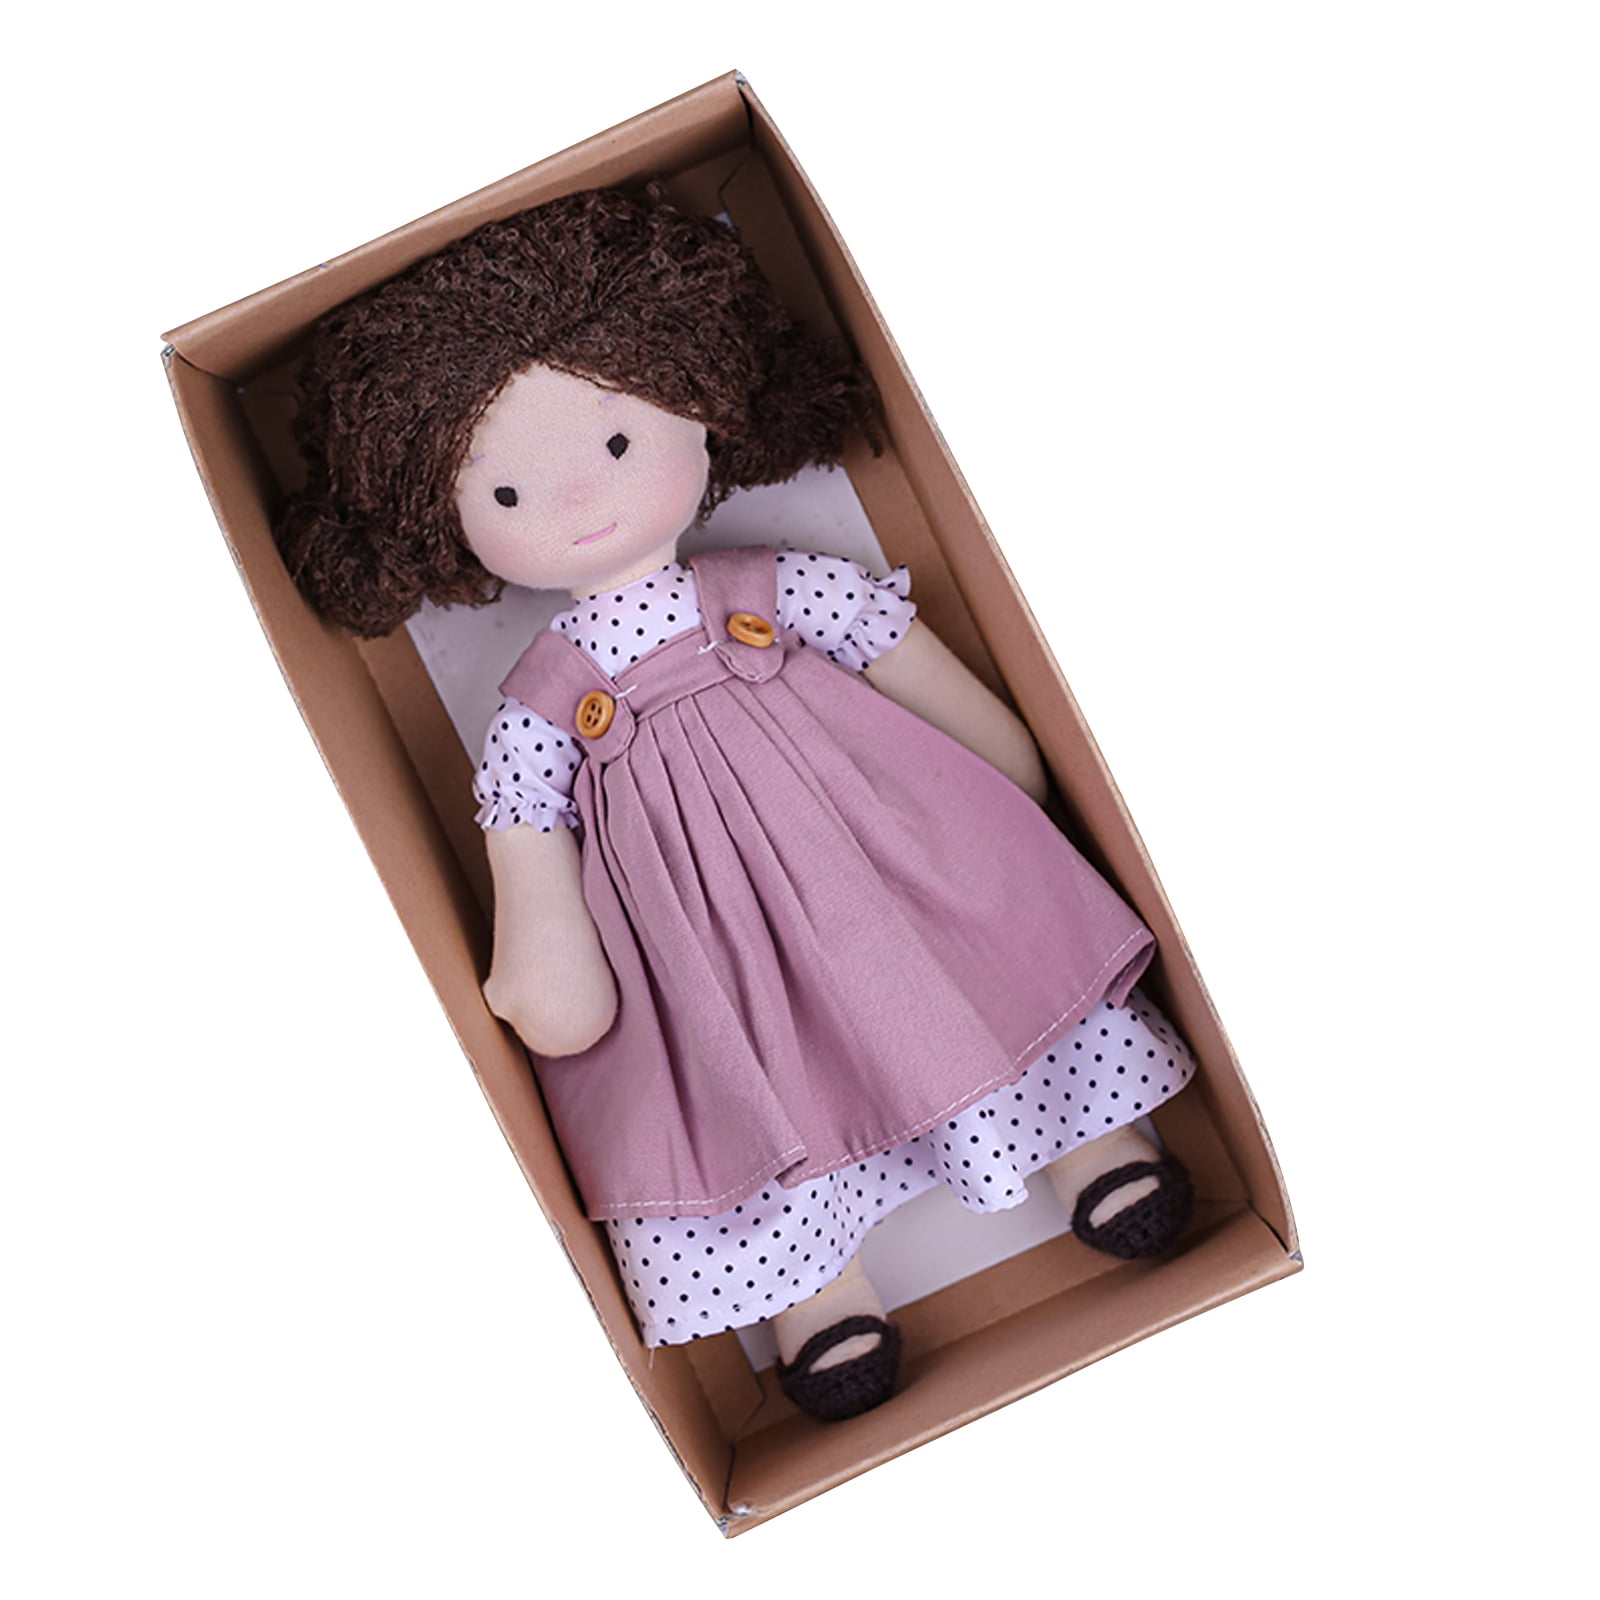 Baofu Baby Girls Soft Doll Cute Cuddly Stuffed Toy Girl Decoration Companion Toys Doll, Size: Small, Green